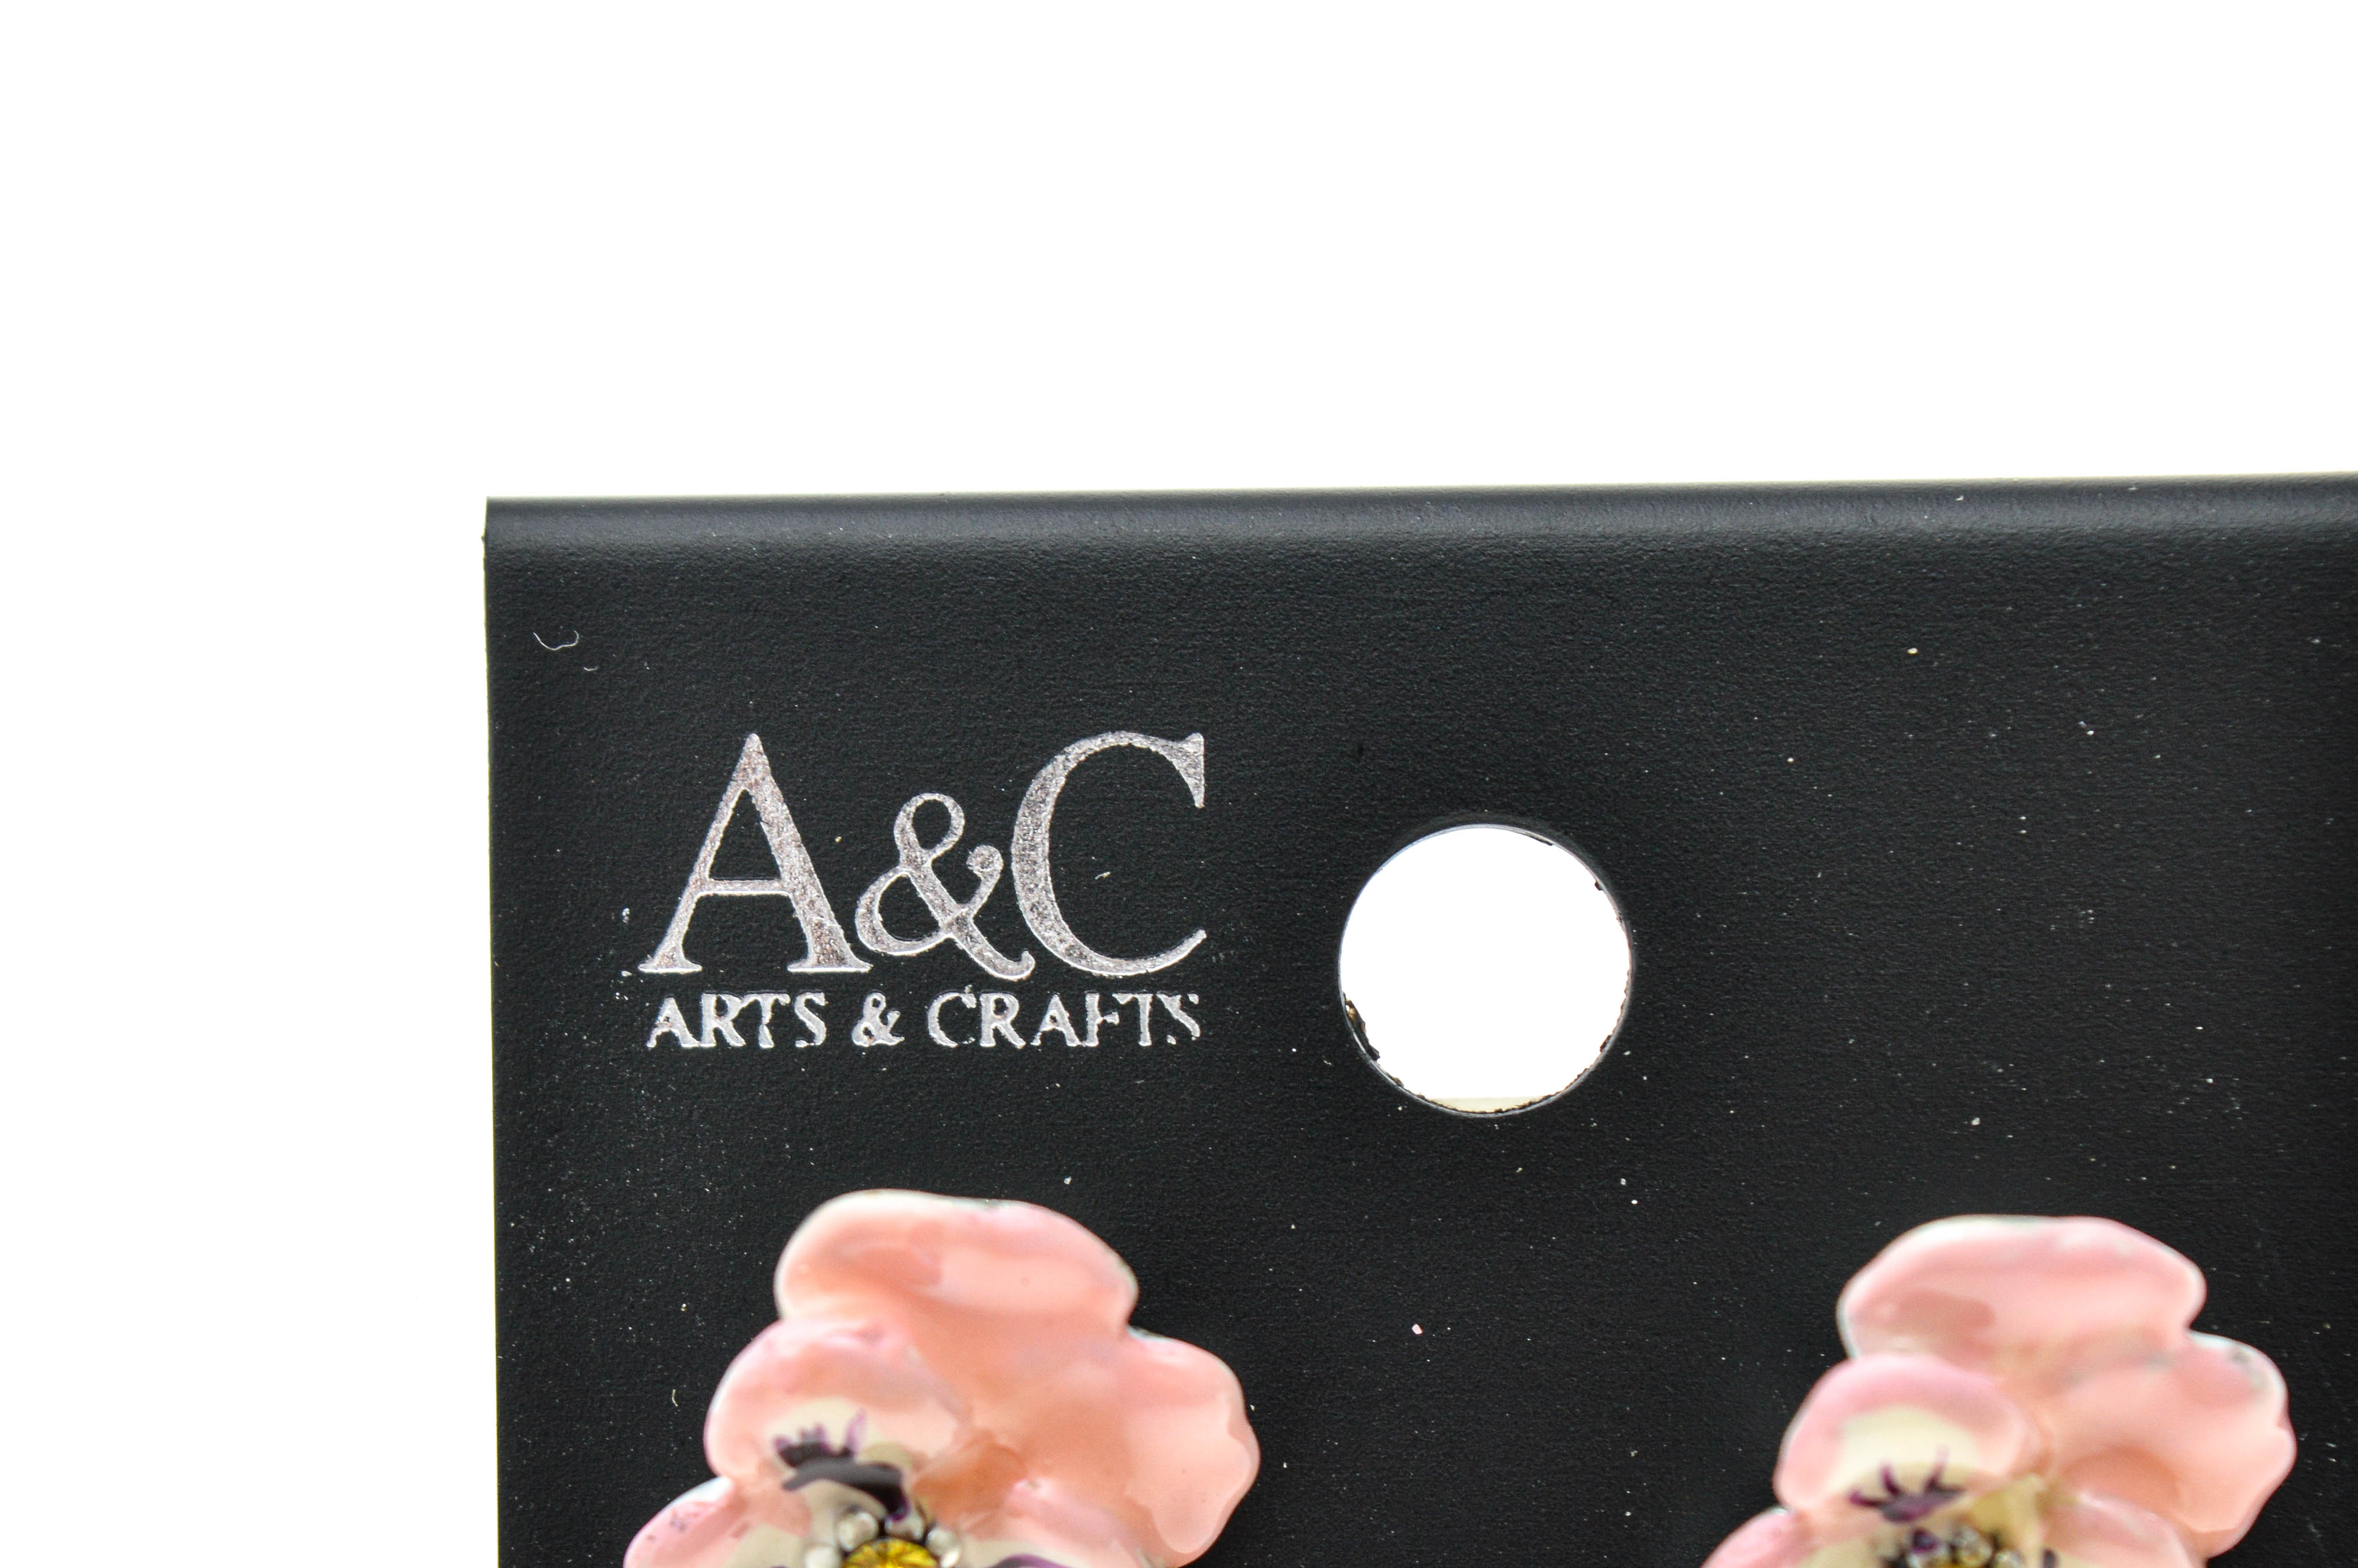 Earrings - ARTS & CRAFTS - 2